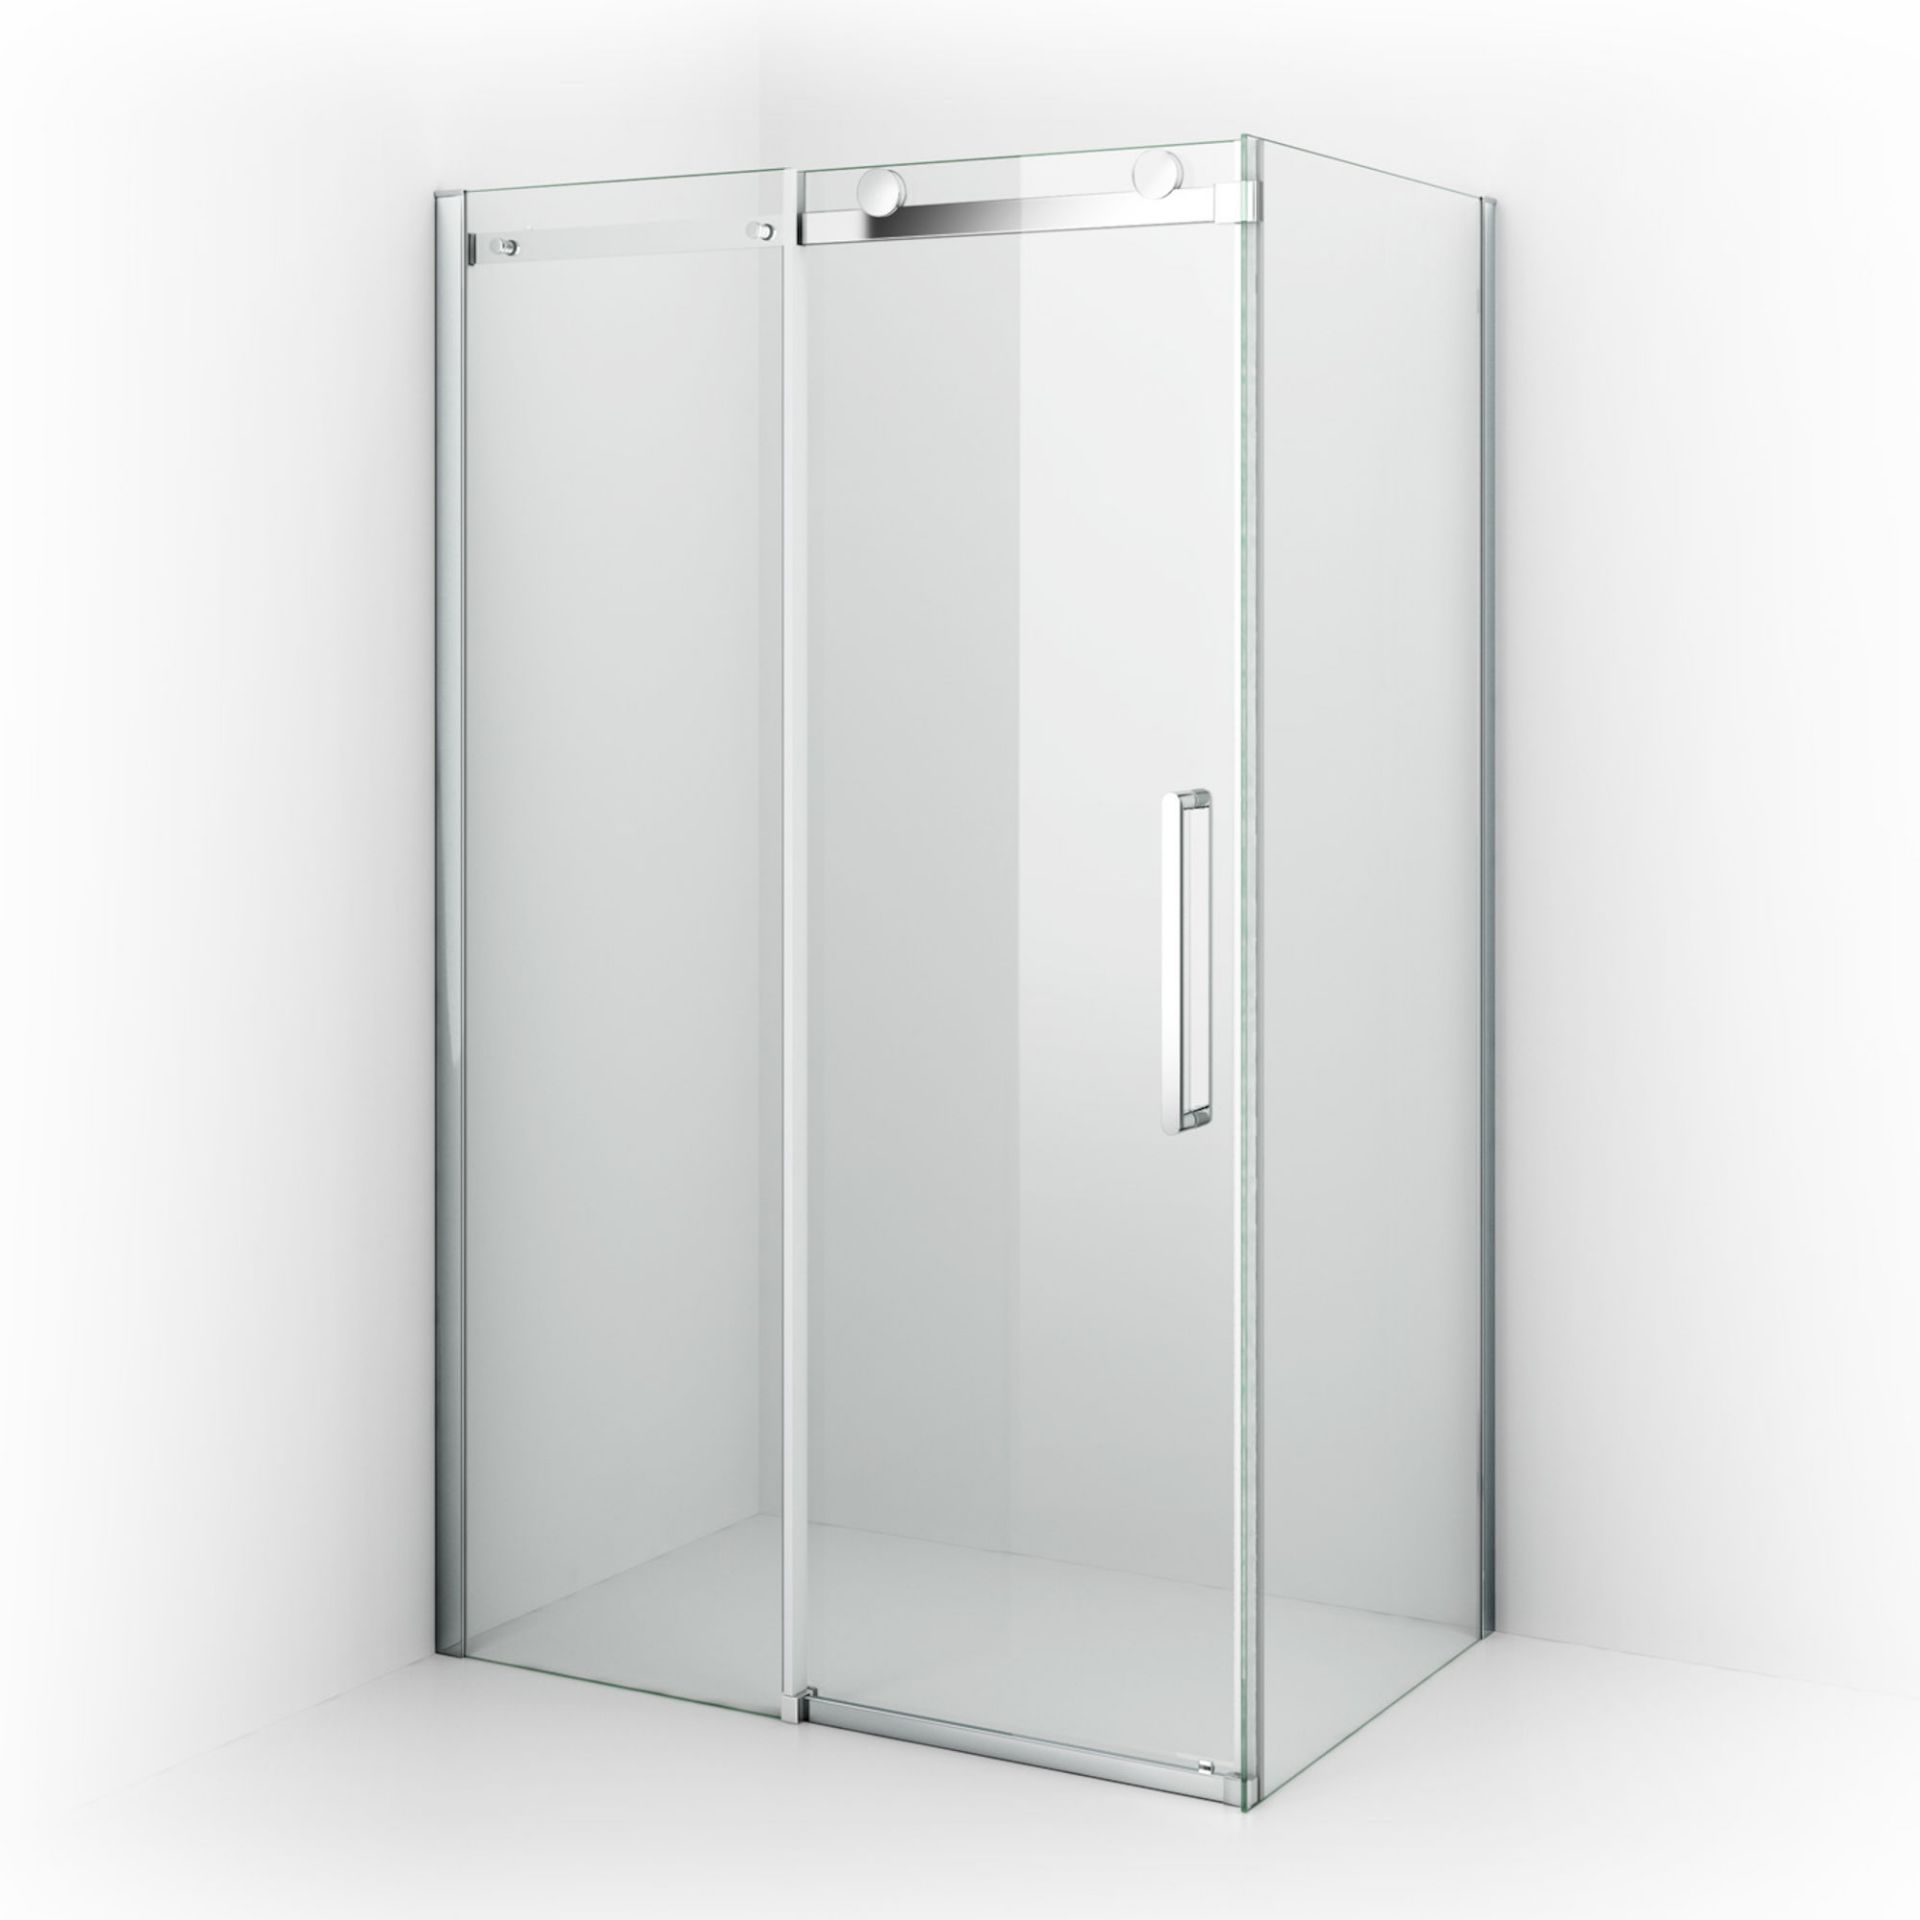 (MW157) 1400x900mm - 8mm - Designer Frameless EasyClean Sliding Door Shower Enclosure. RRP £472. - Image 4 of 5